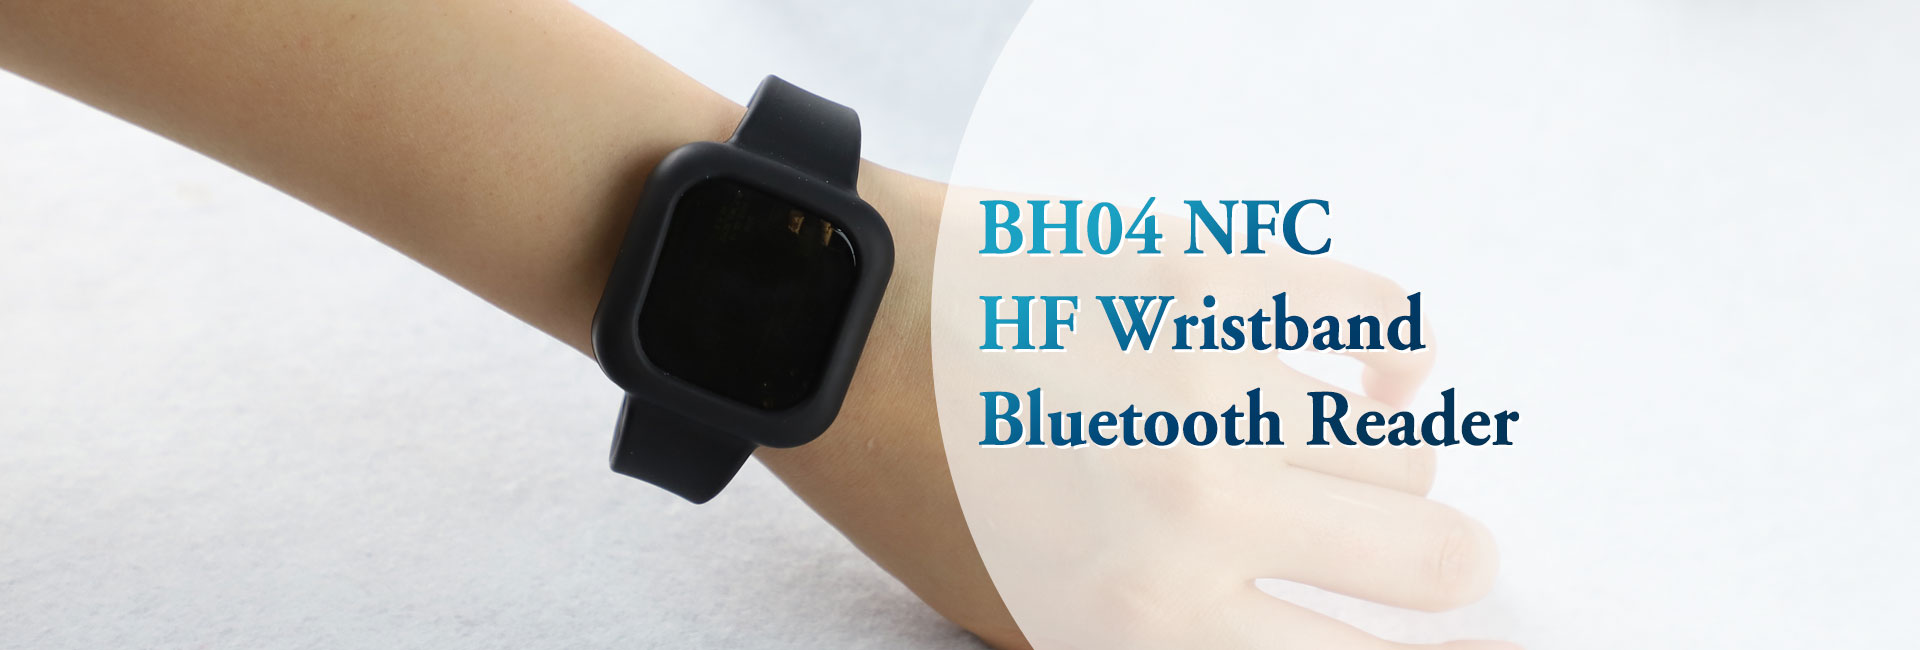 BH04 NFC高频腕带蓝色tooth Reader